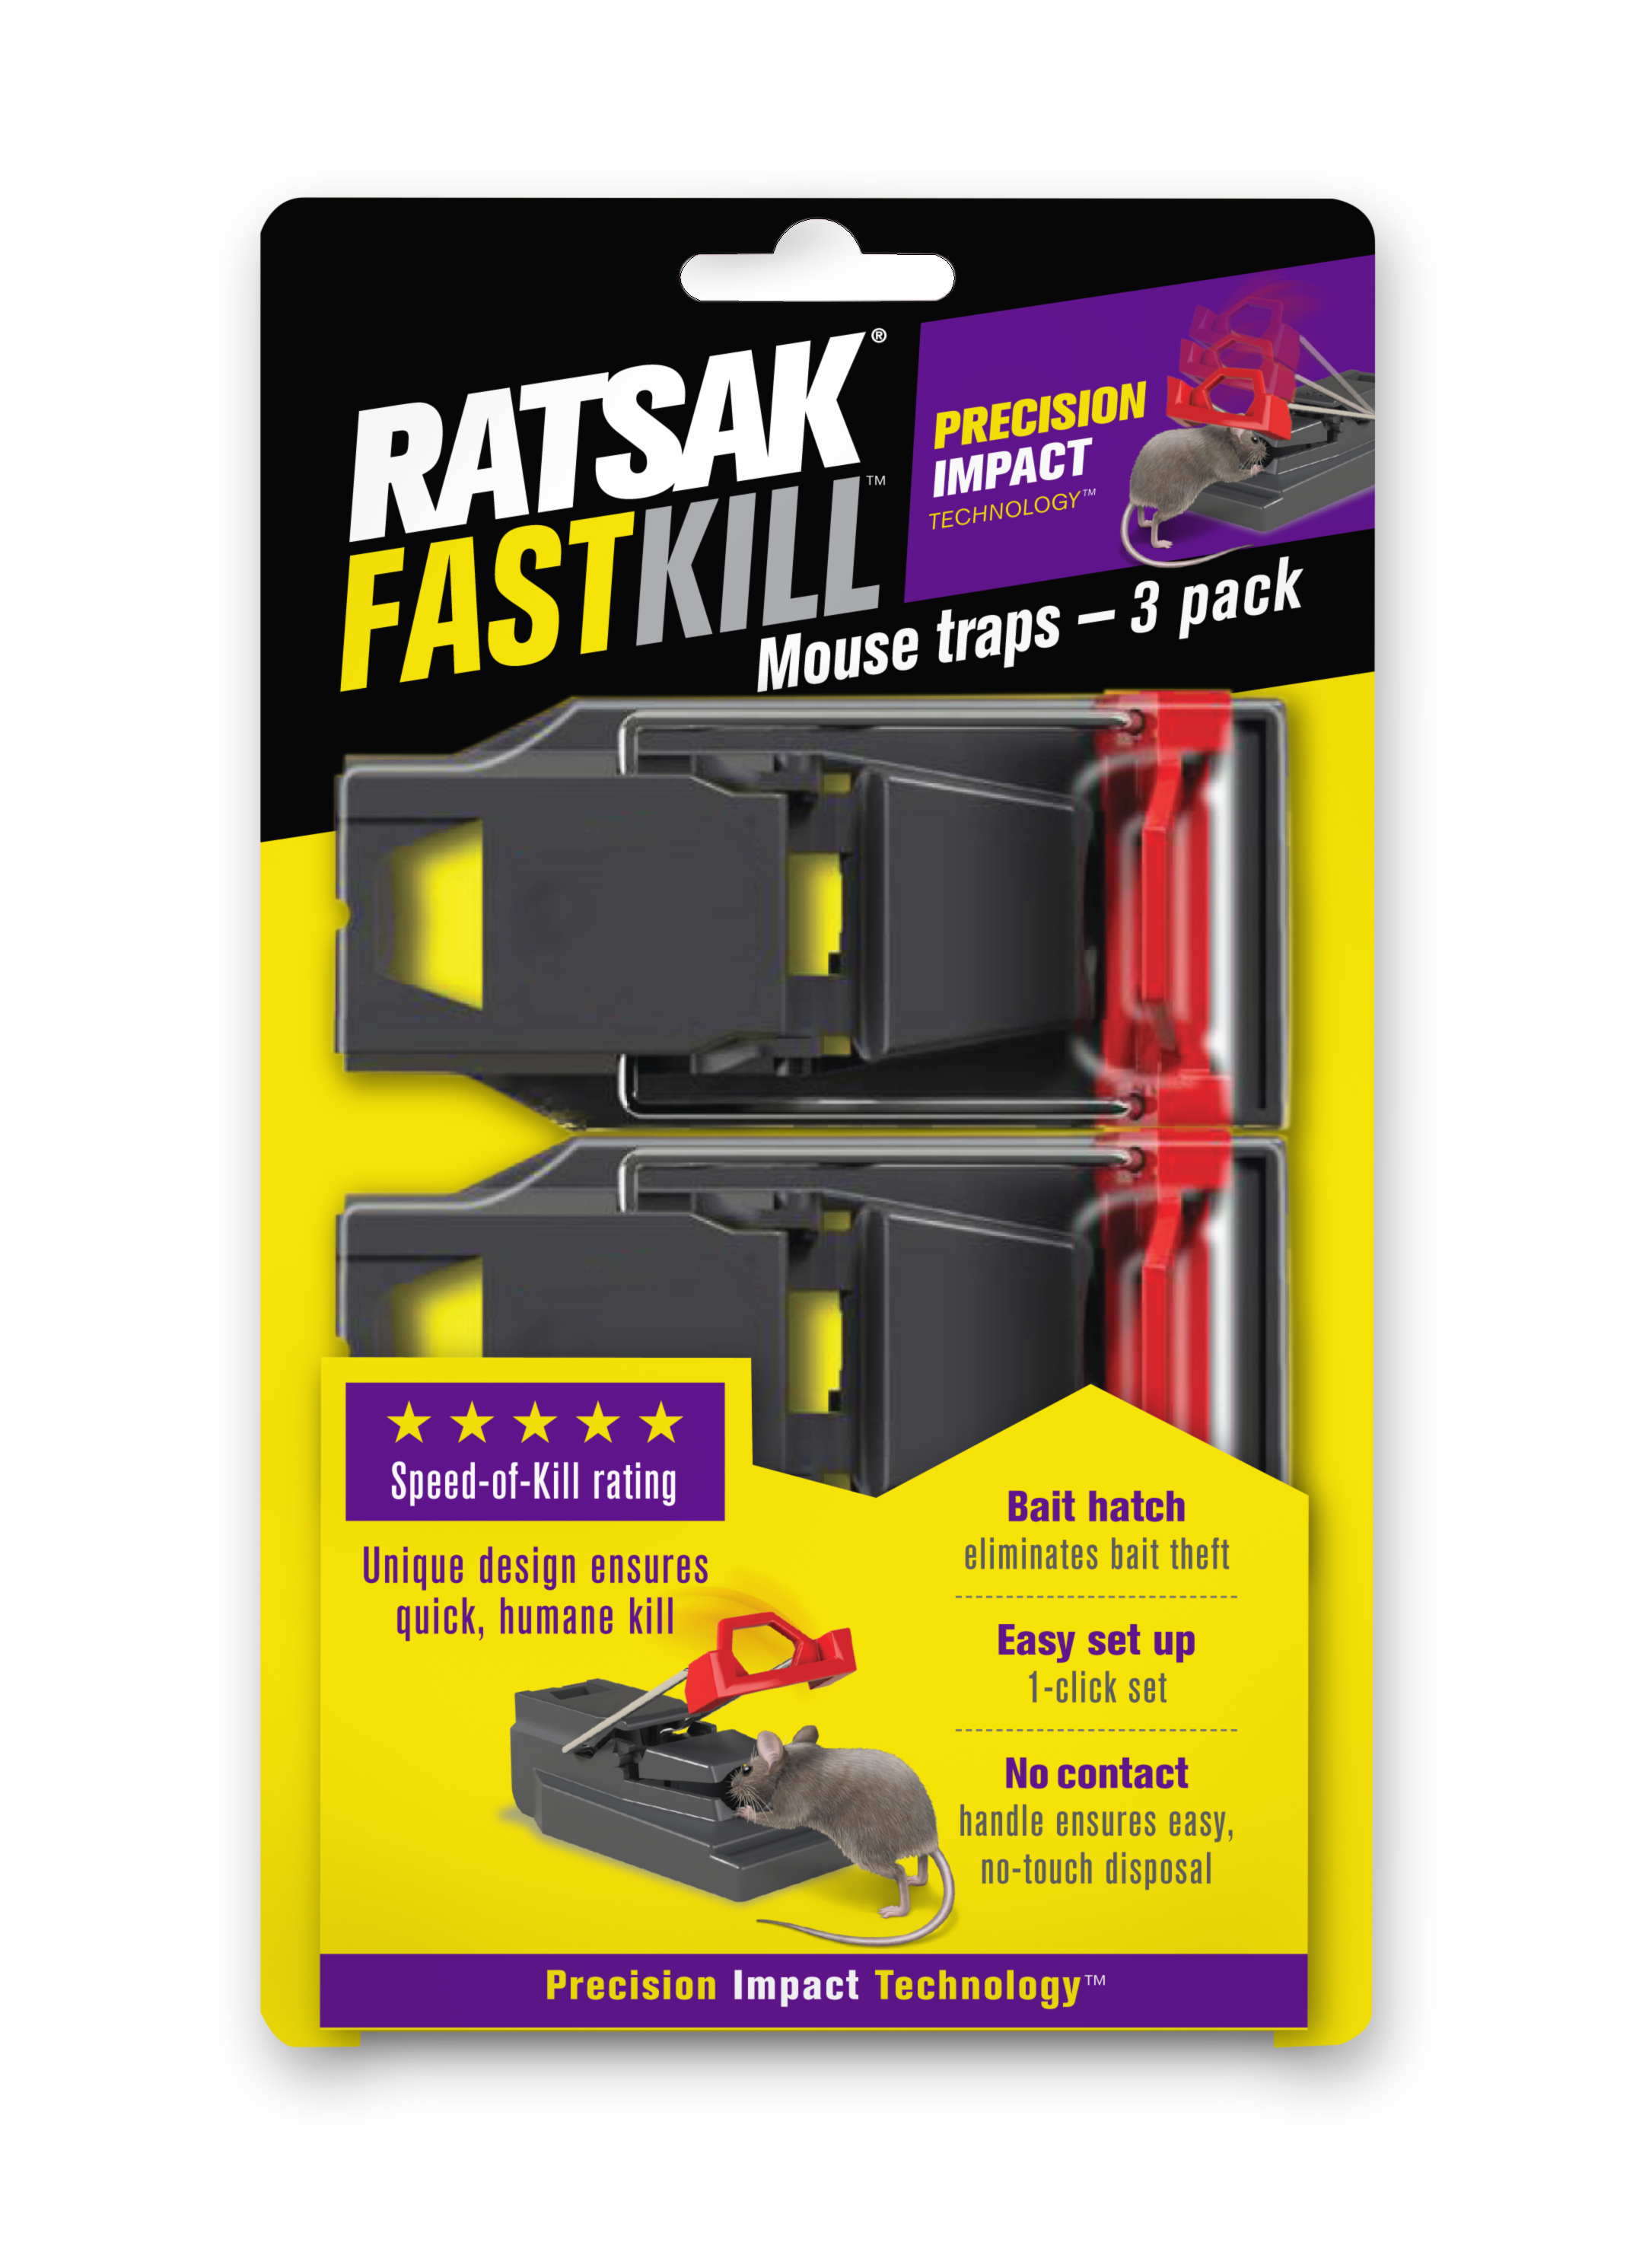 https://www.yates.com.au/media/mftj40wb/55451_ratsak-fast-kill-mouse-trap_3-pack_fop.jpg